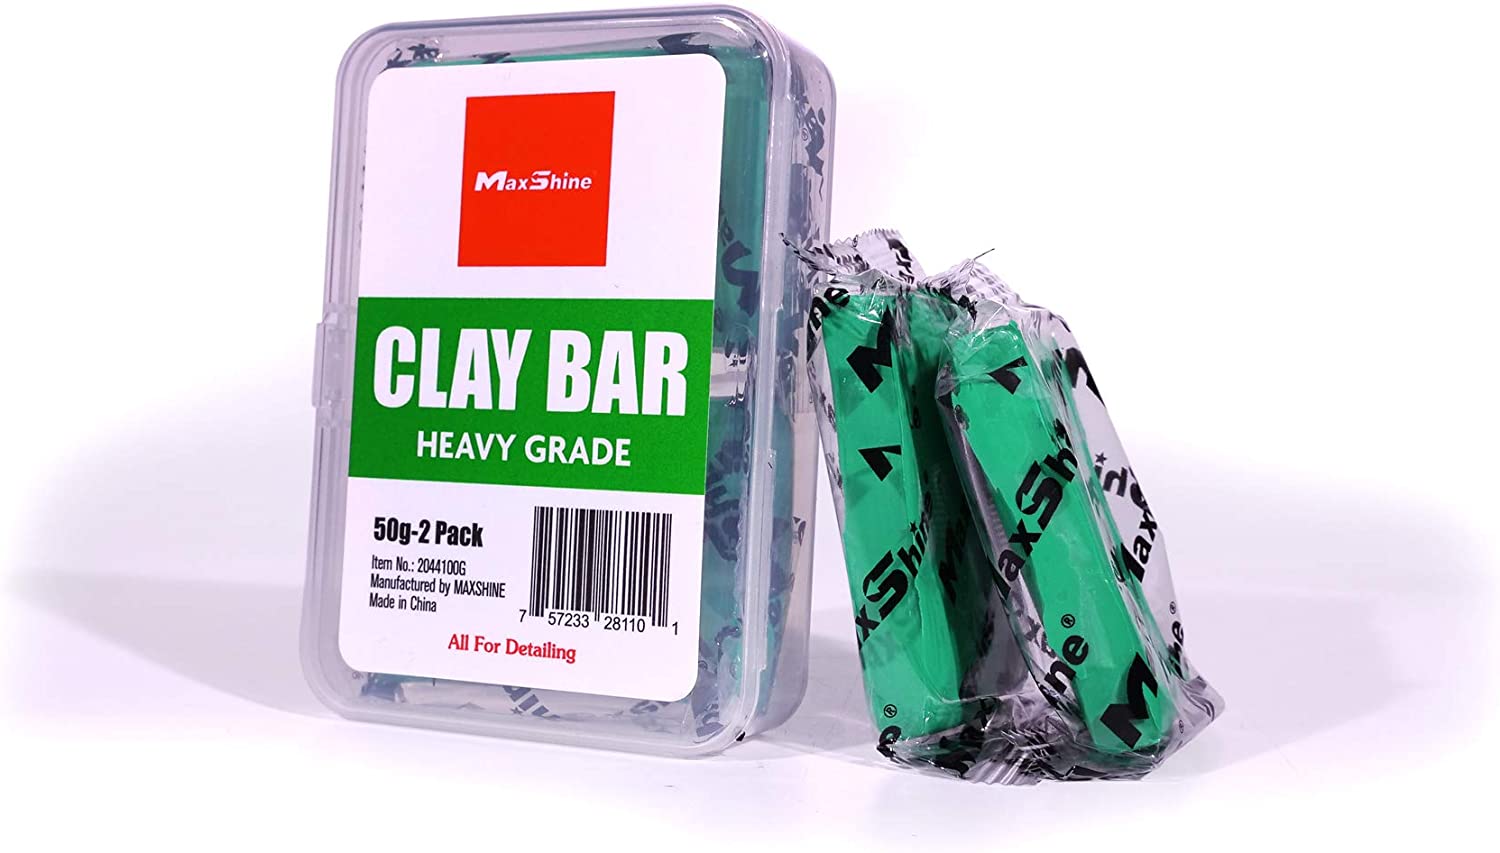 Clay Bar Towel, Fine Grade Microfiber Clay Towel Automotive Detailing Towel  Clay Bar Alternative for Car Detailing, Creative Gift--Blue, 1 Pack